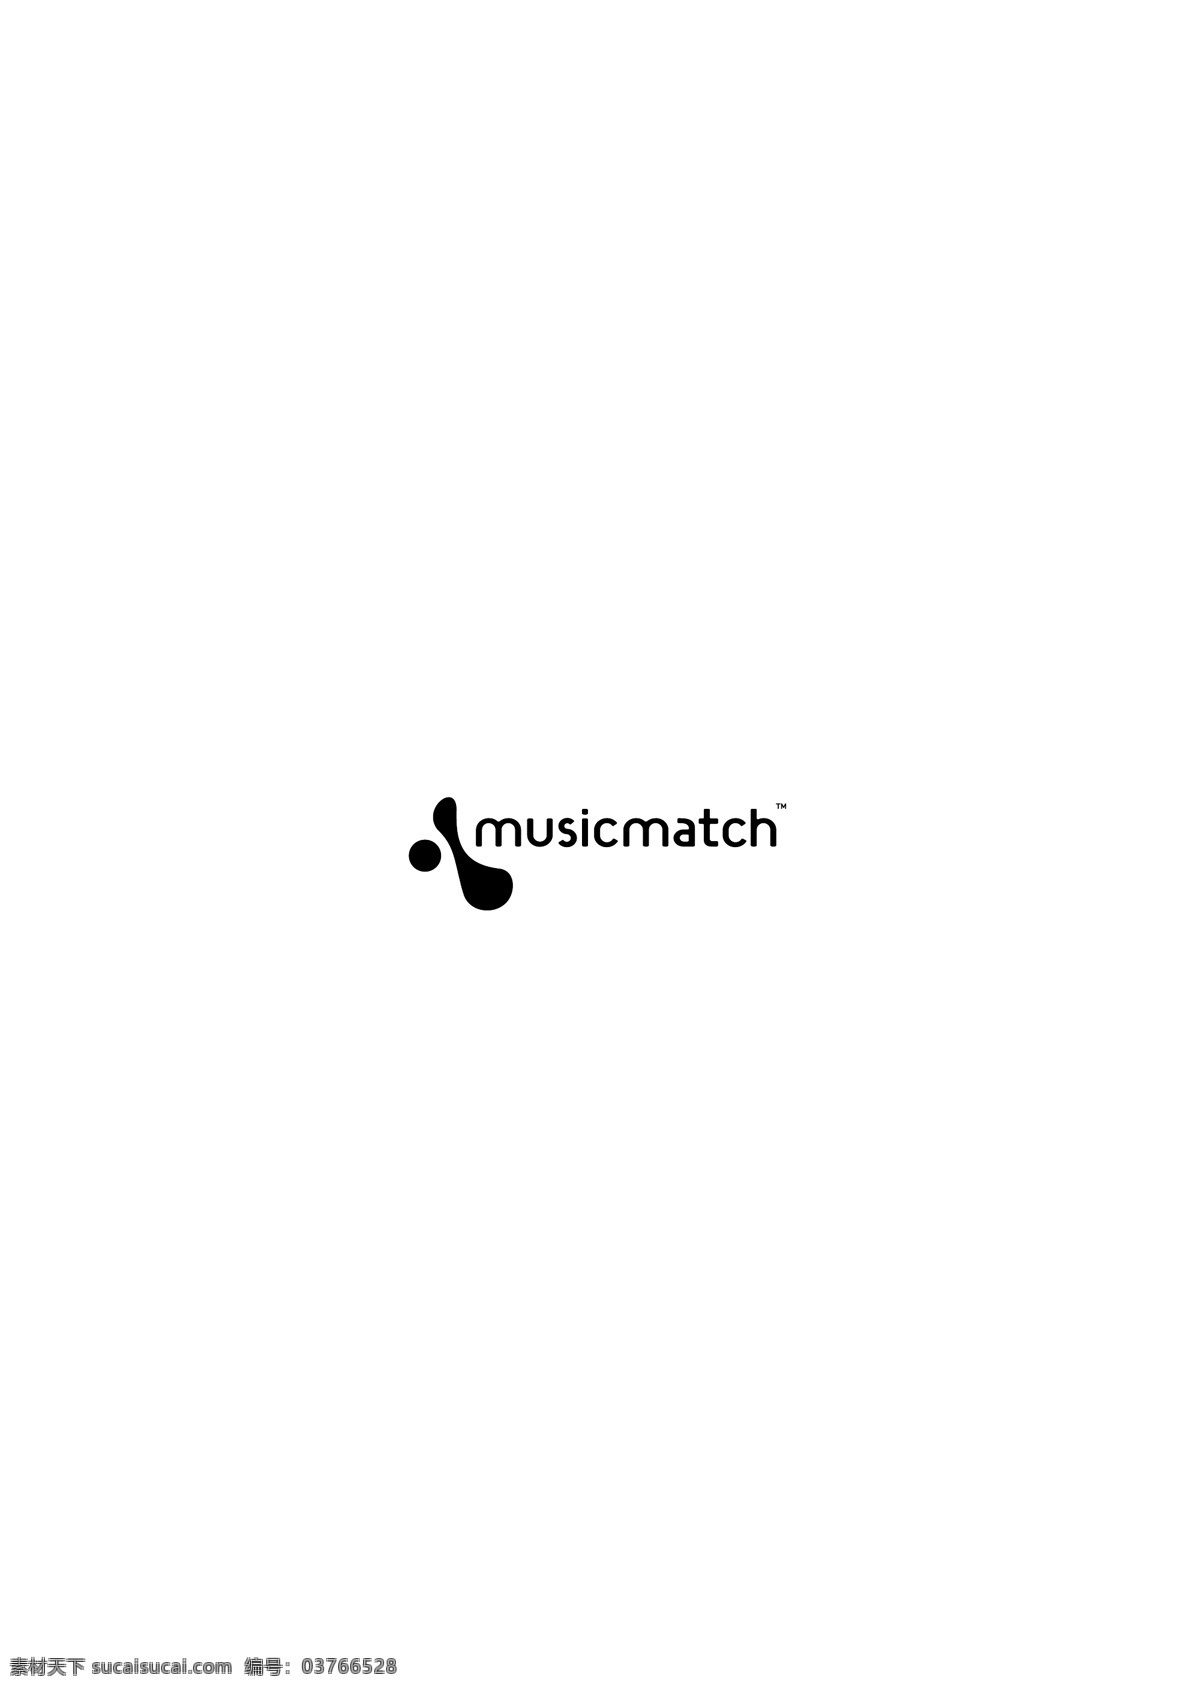 musicmatch logo 设计欣赏 musicmatchcd 唱片 标志 标志设计 欣赏 矢量下载 网页矢量 商业矢量 logo大全 红色